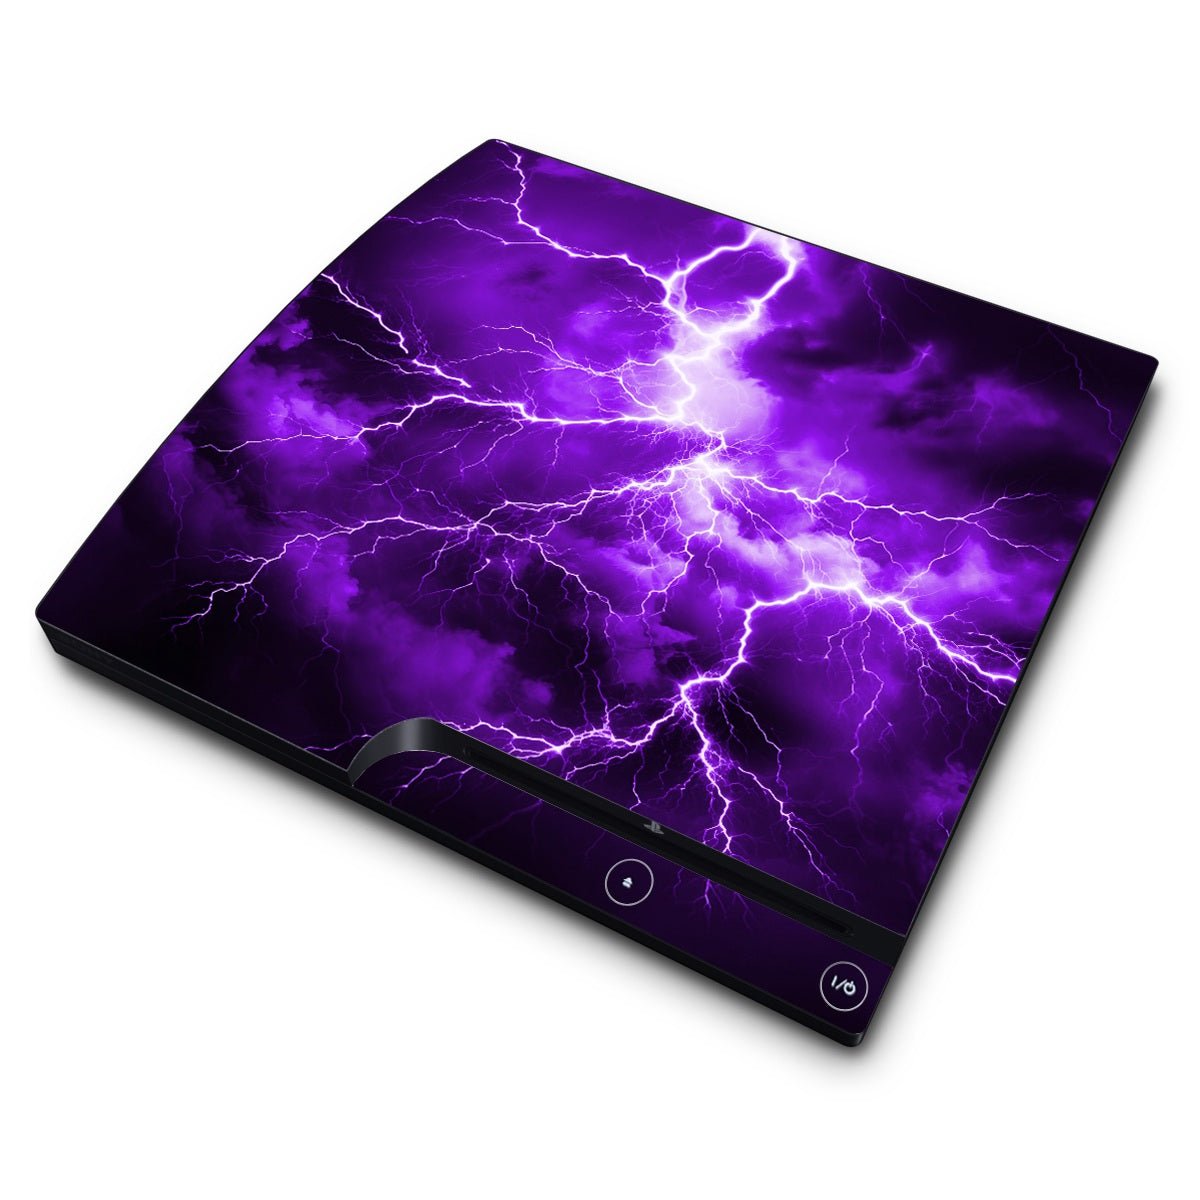 Apocalypse Purple - Sony PS3 Slim Skin - Gaming - DecalGirl